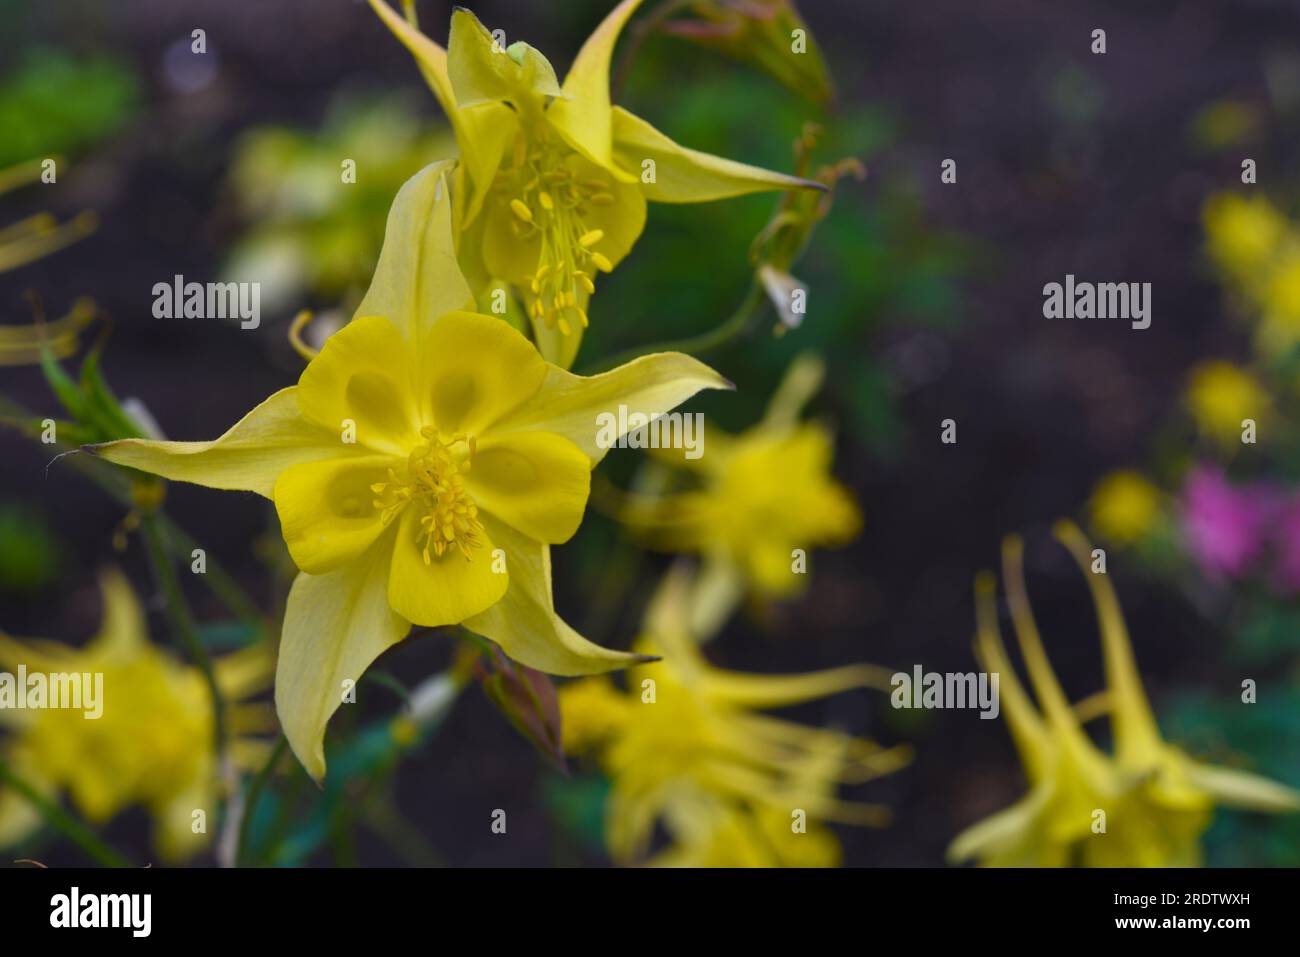 Aquilegia. Ranunculaceae. Yellow flowers of aquilegia in the summer garden. Stock Photo